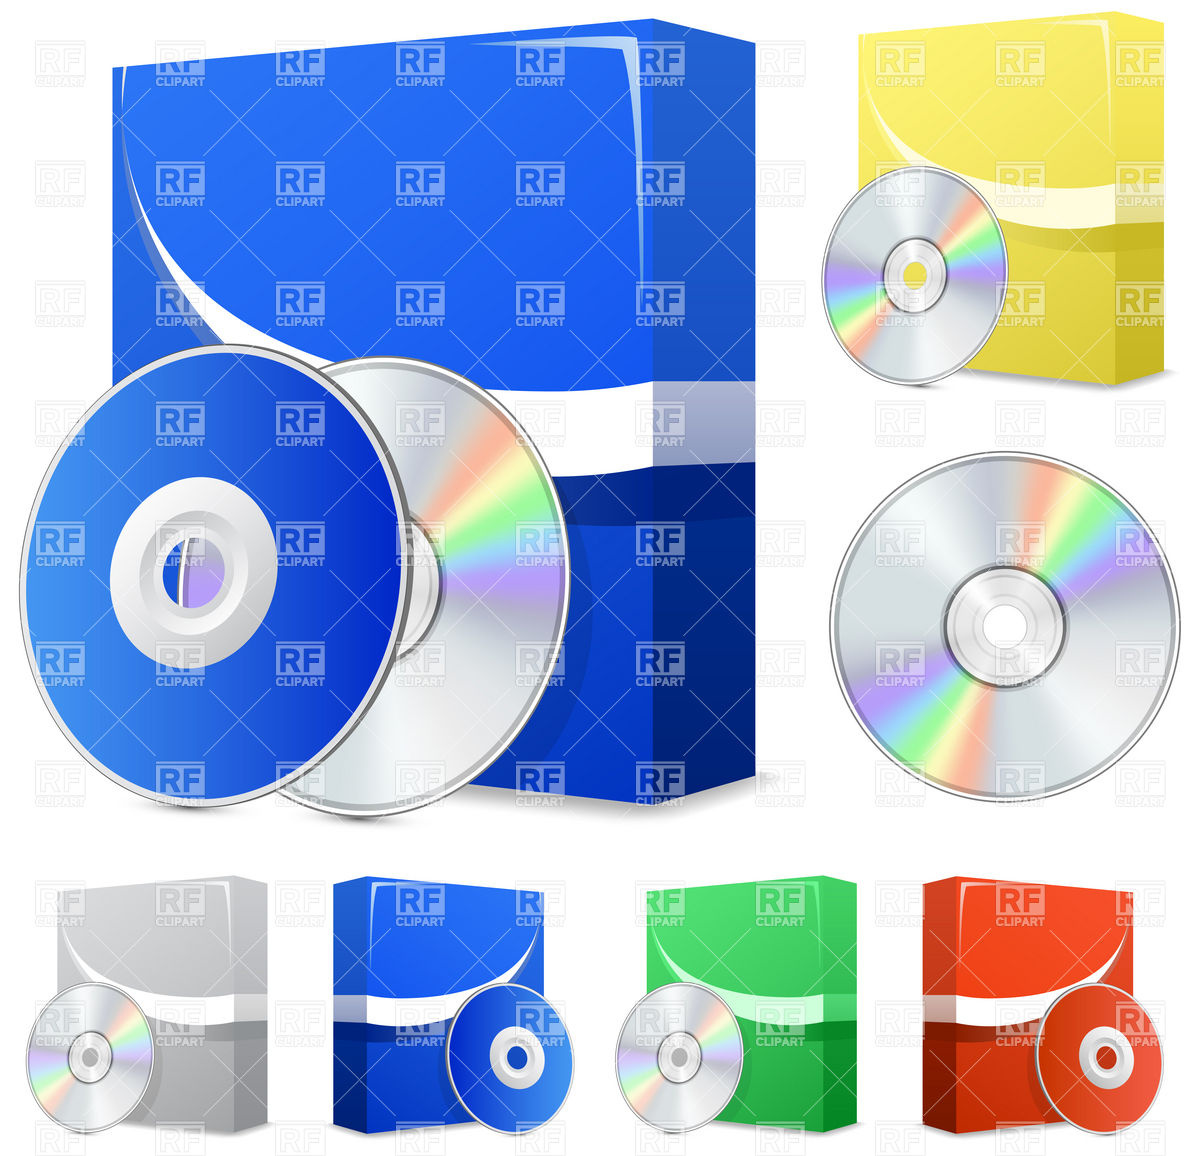 Software boxes and CD disks Royalty Free Vector Clip Art